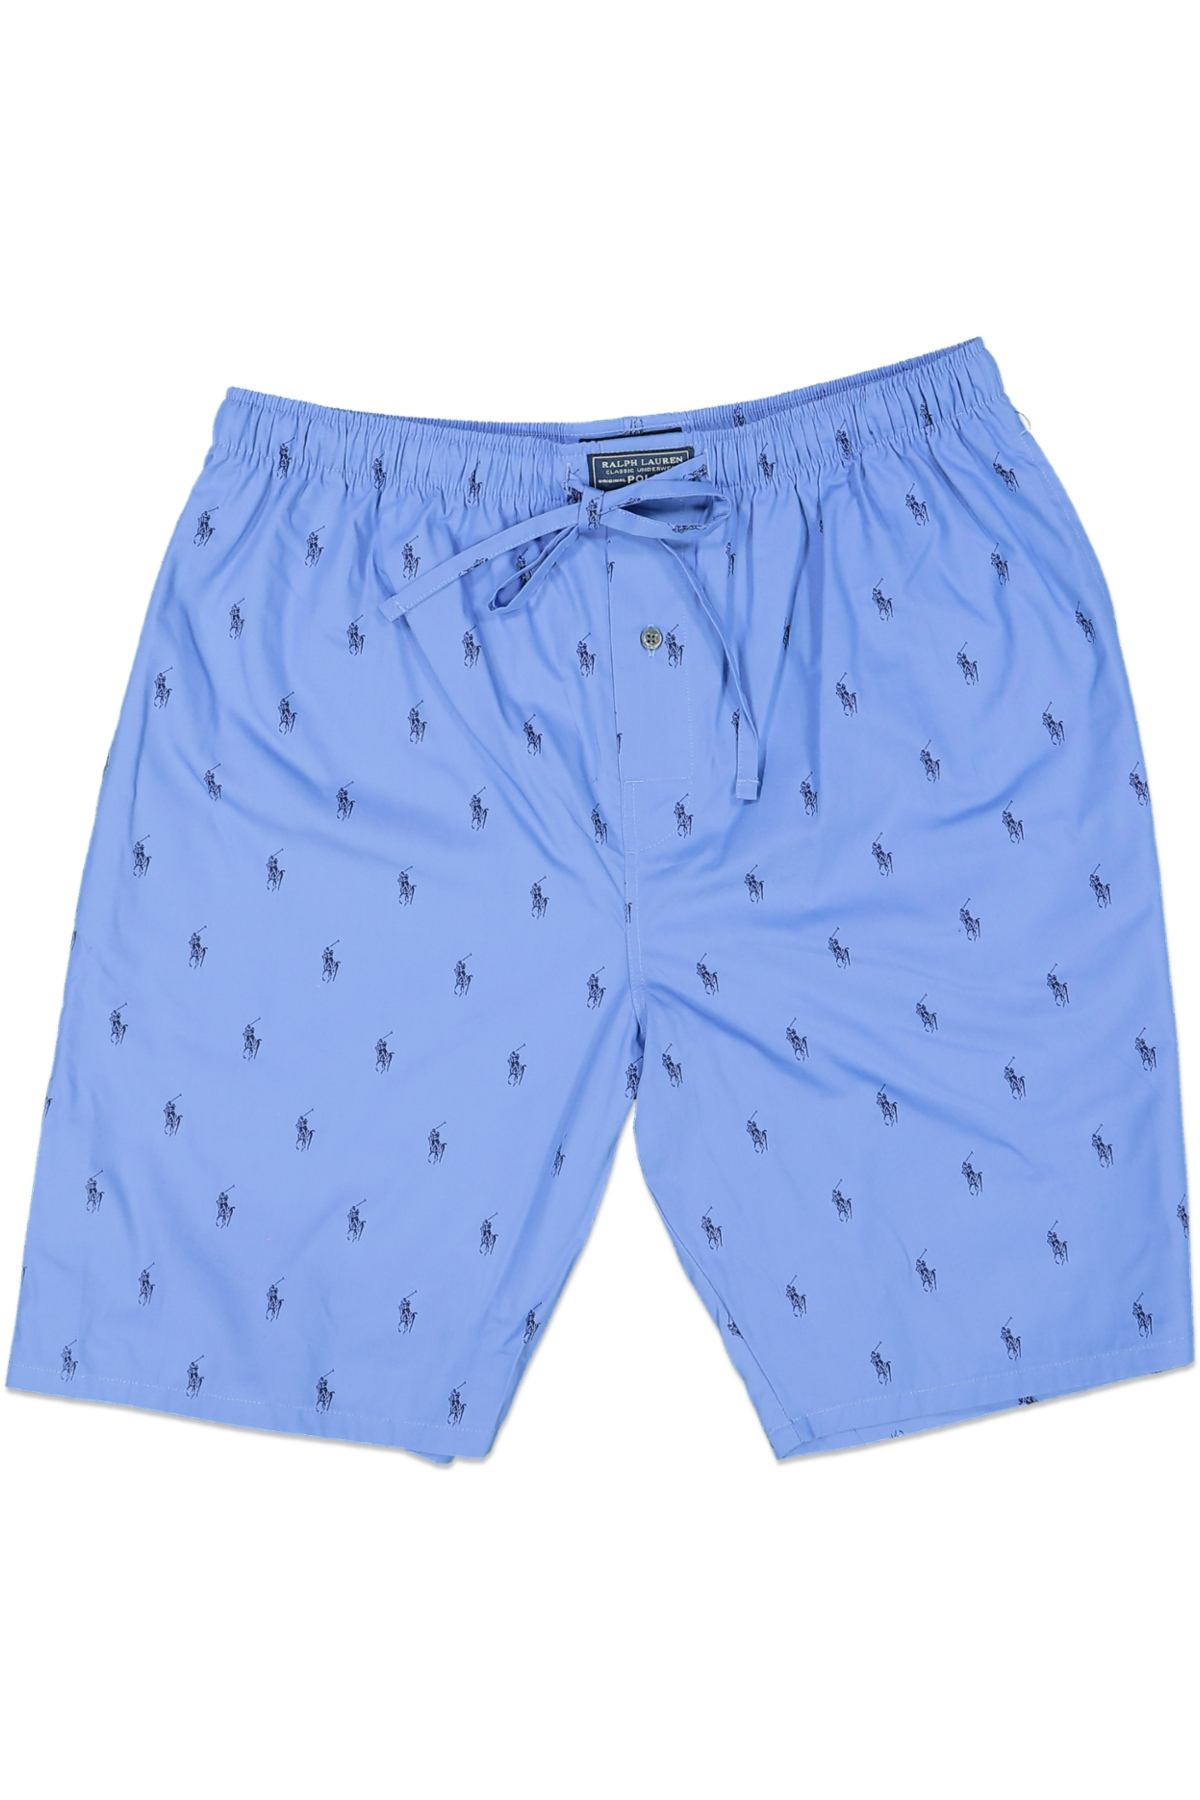 Polo Ralph Lauren Sleep Shorts Blue